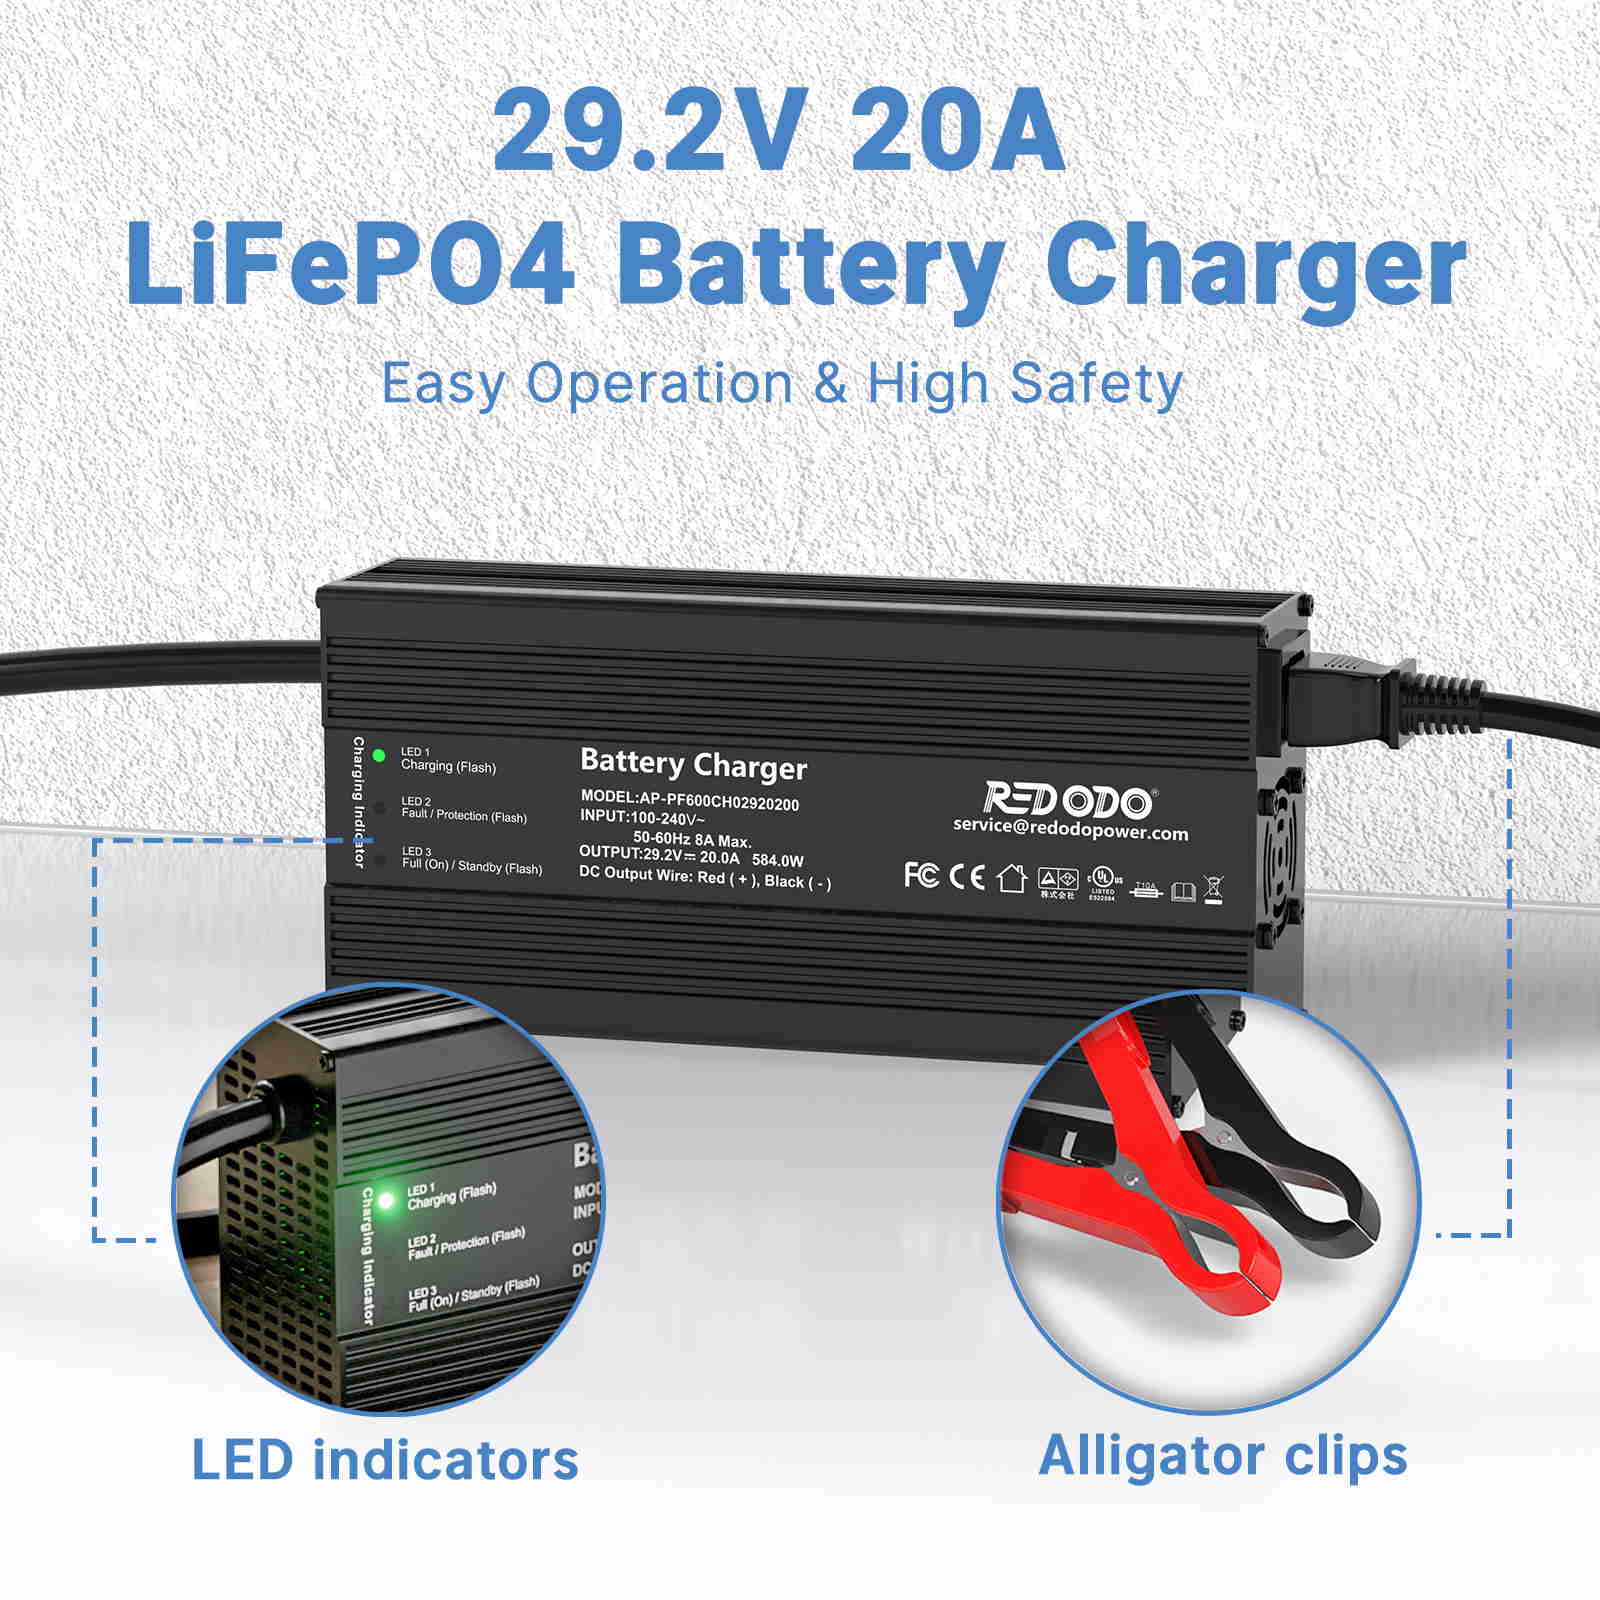 Redodo 29.2V 20A LiFePO4 Battery Charger